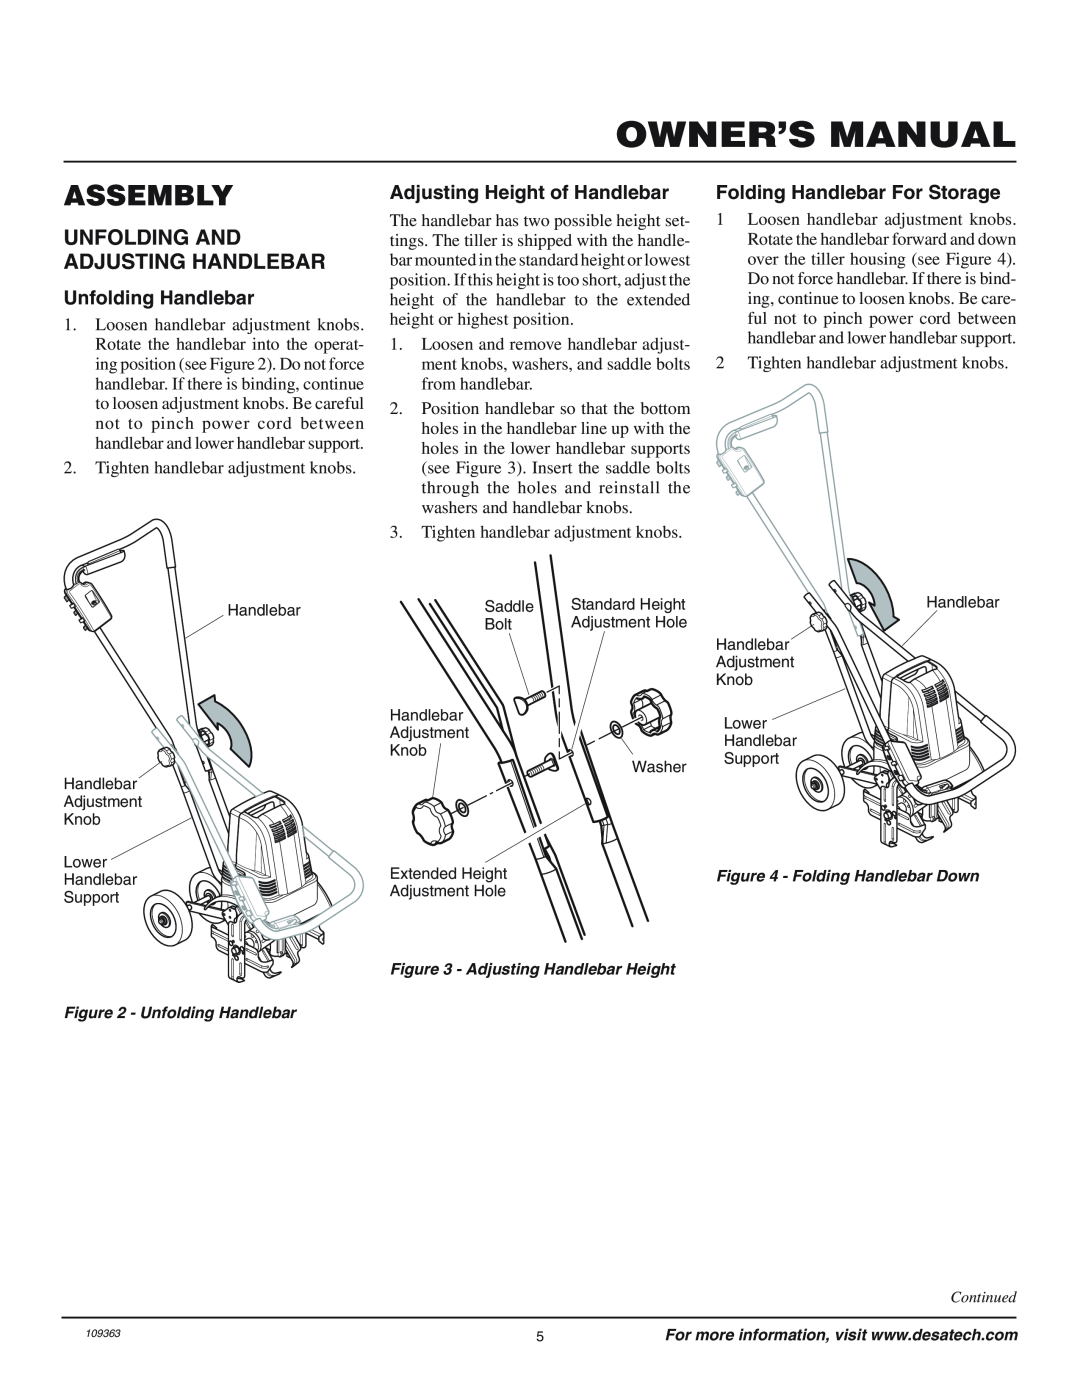 Remington 109312-01 Assembly, Unfolding And Adjusting Handlebar, Unfolding Handlebar, Adjusting Height of Handlebar 